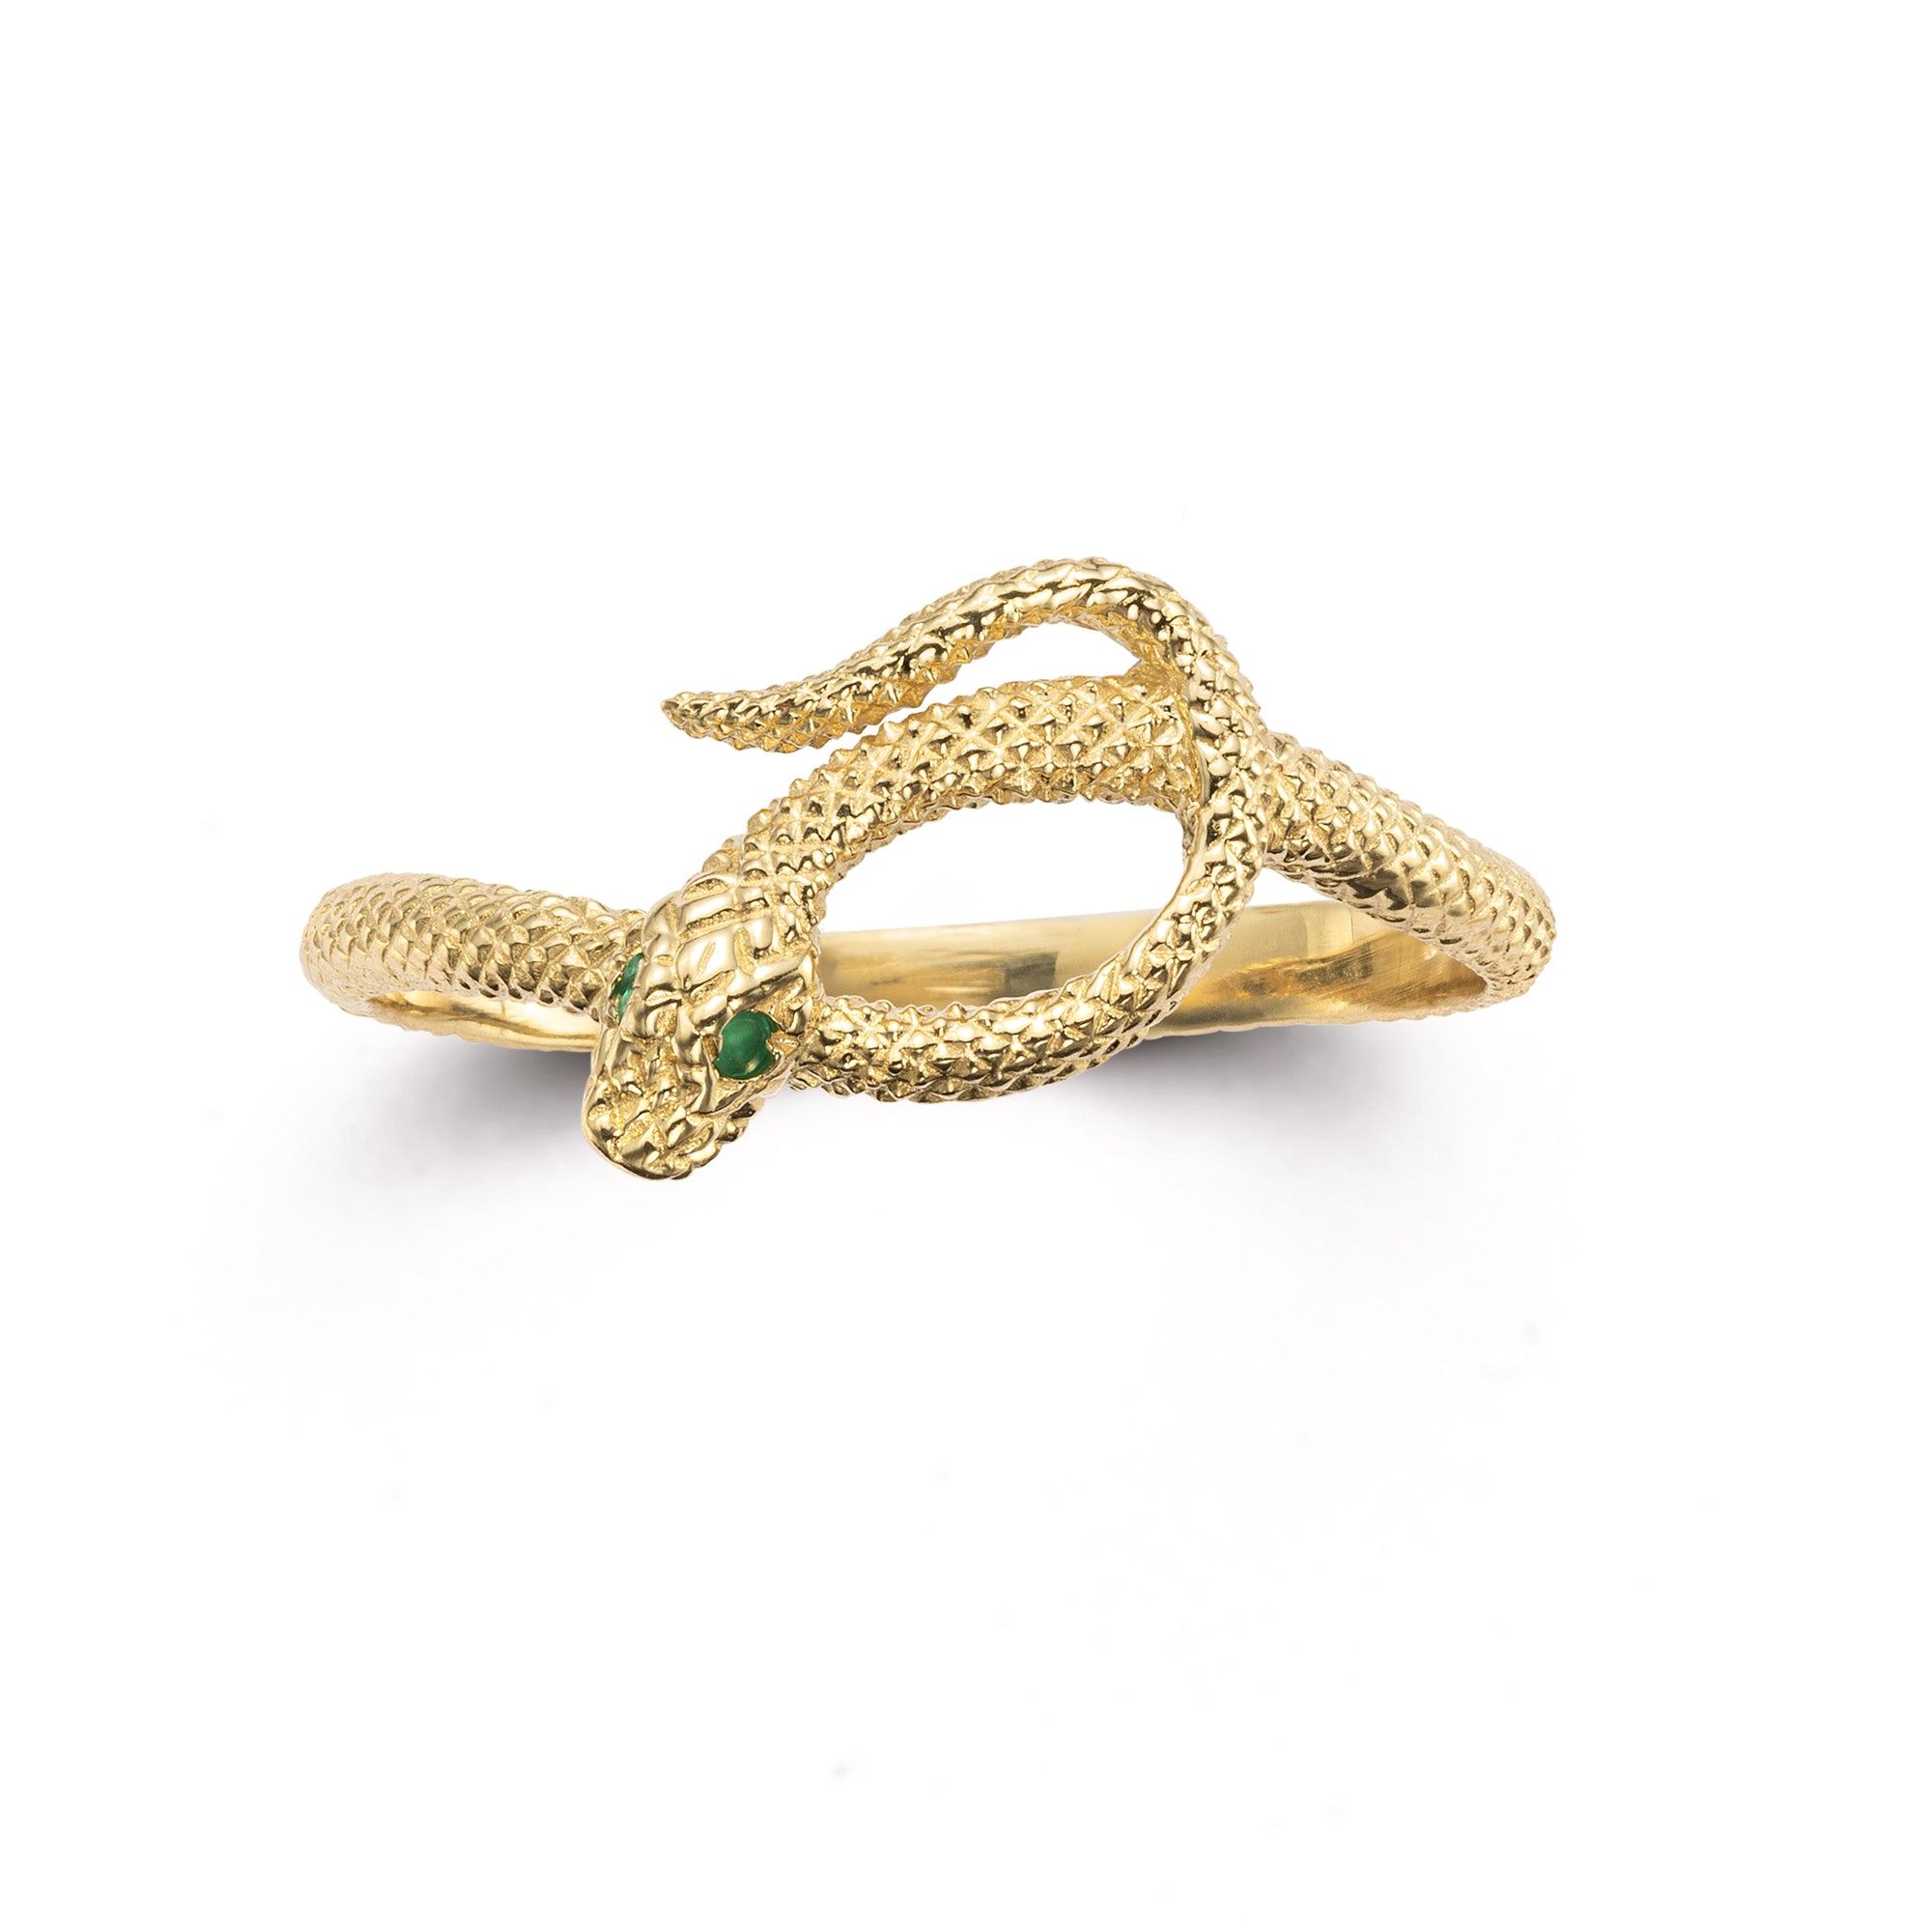 Serpent Ring with Emerald Eyes - Nora Kogan